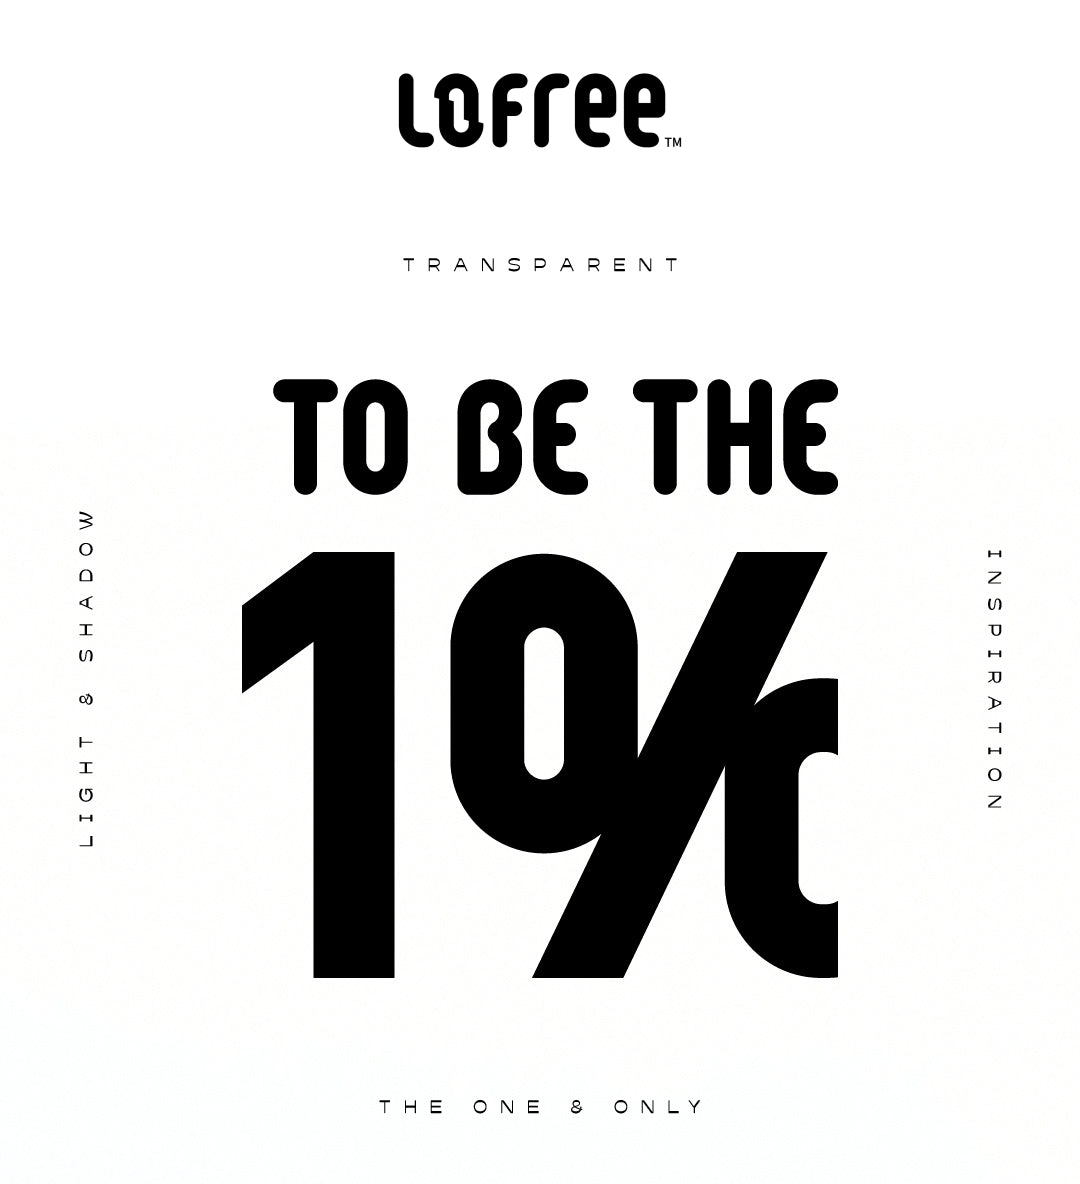 What's behind LOFREE 1%?